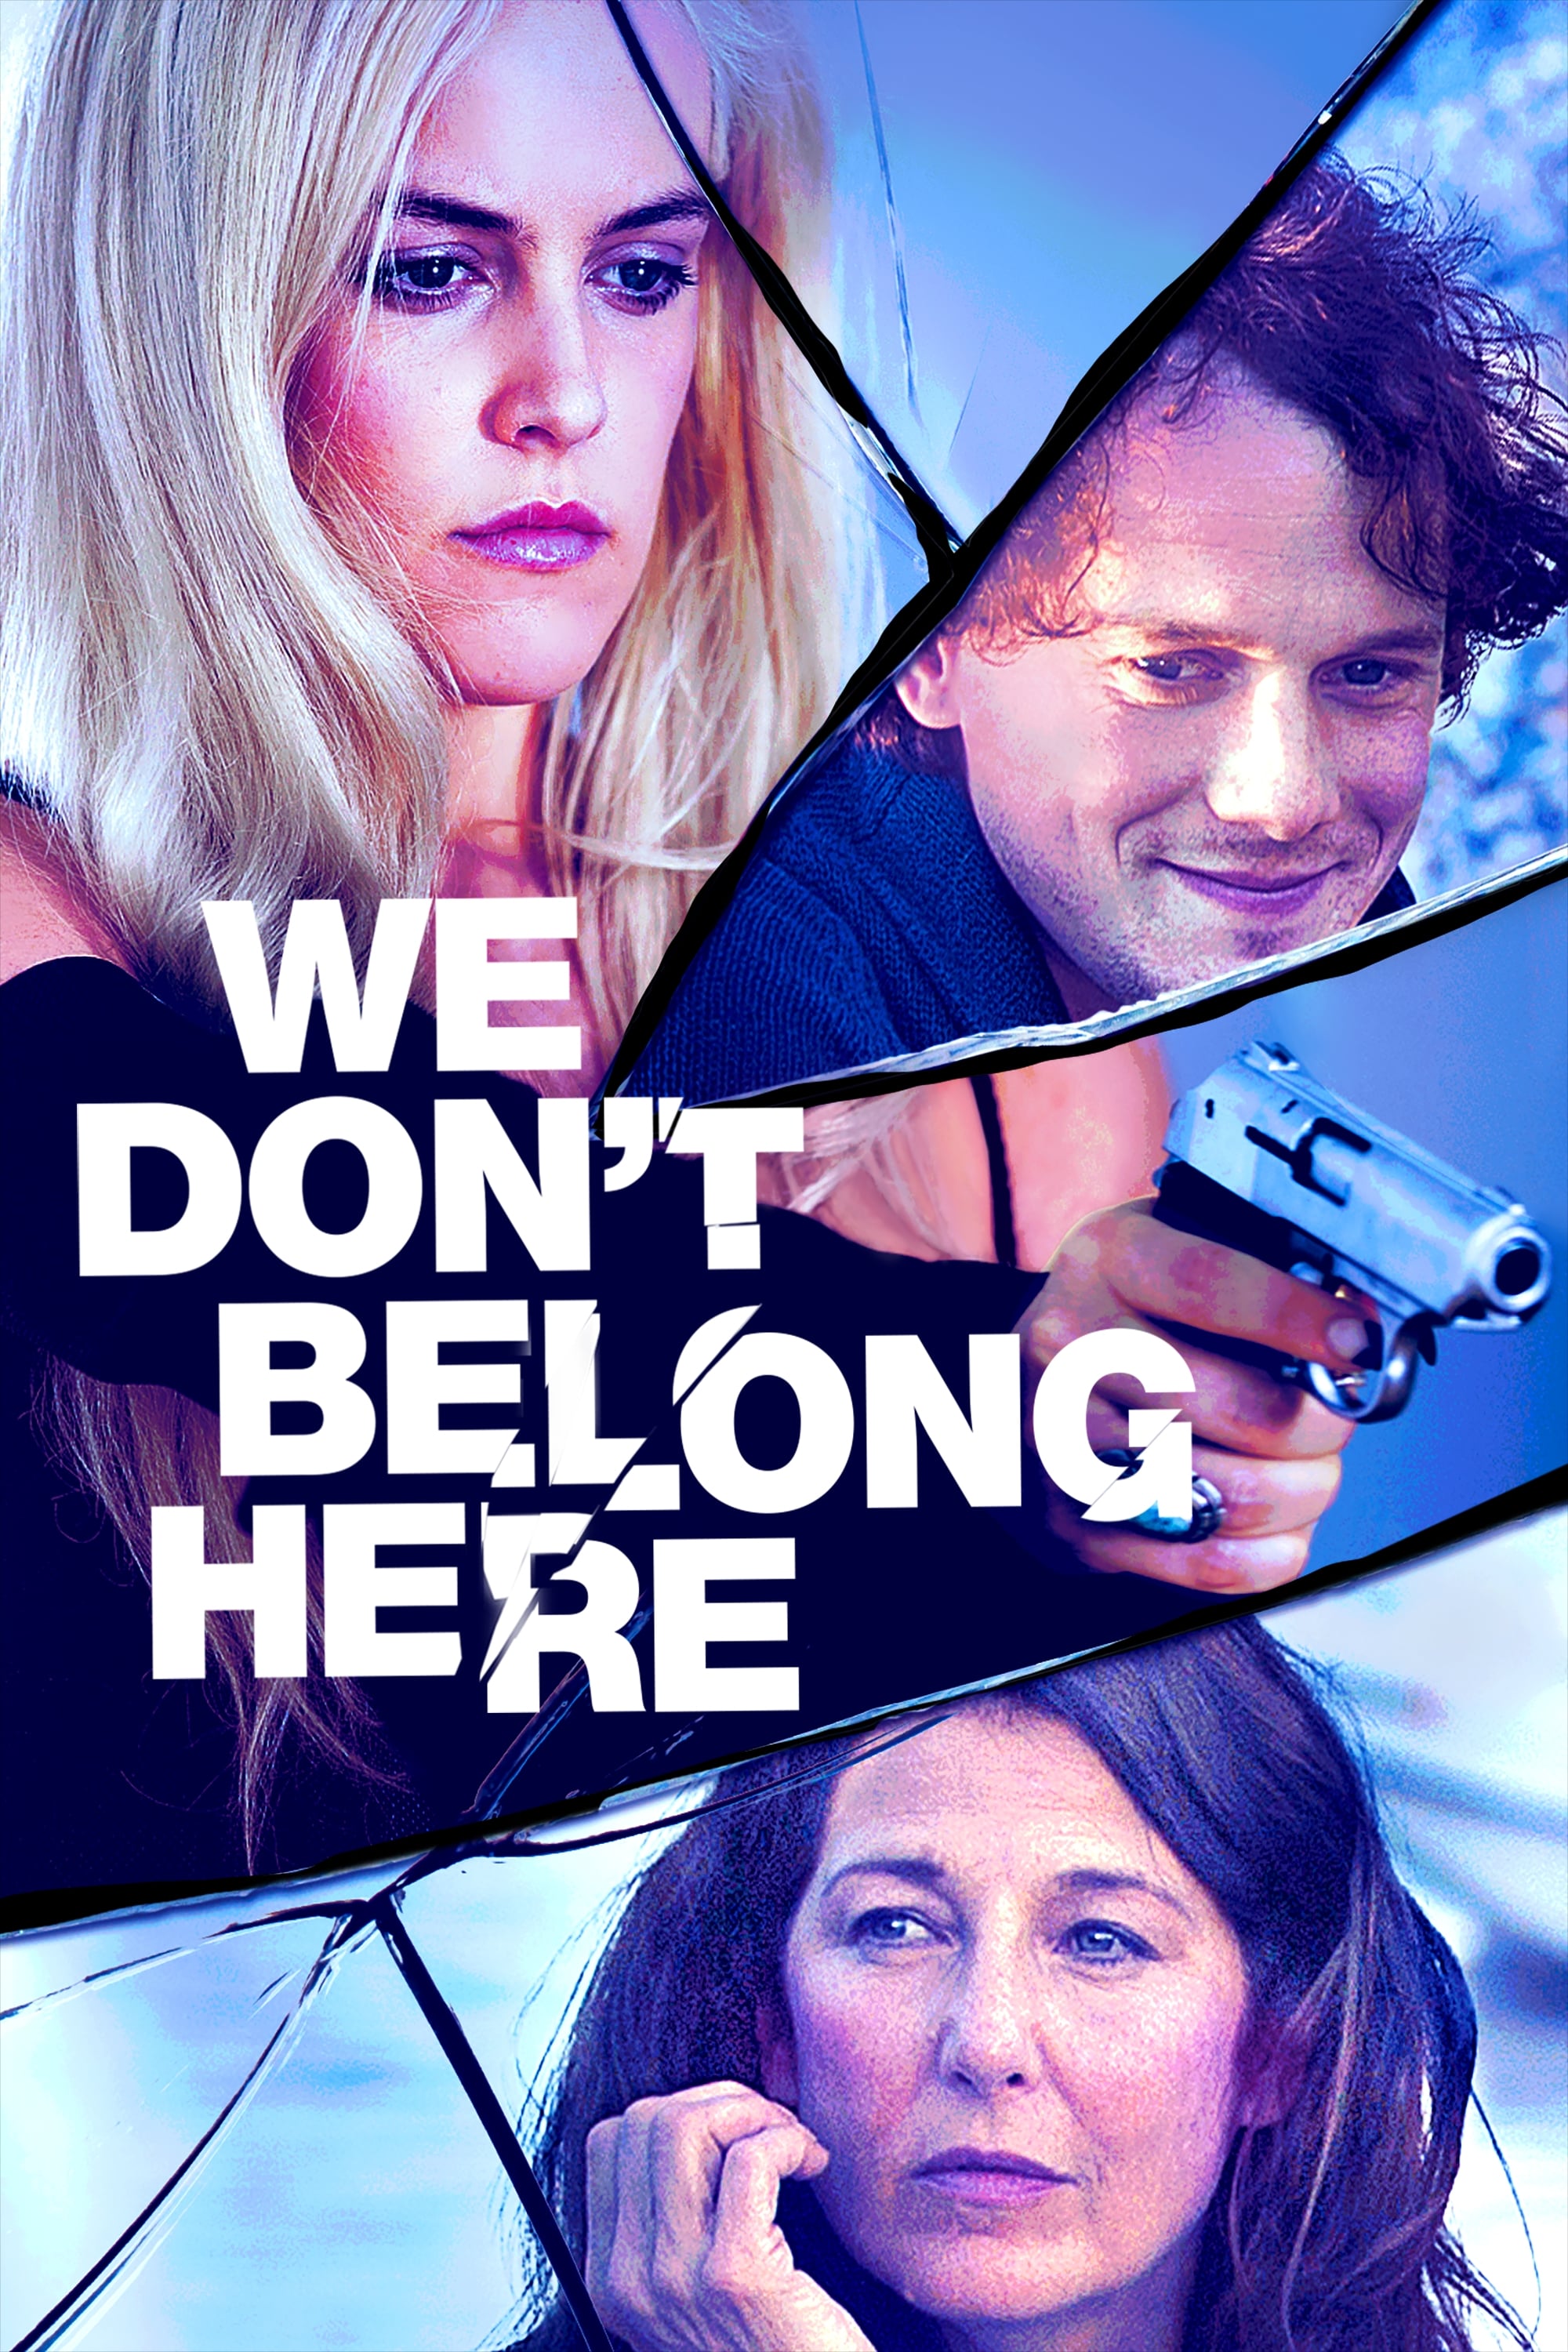 We Don't Belong Here (2017)